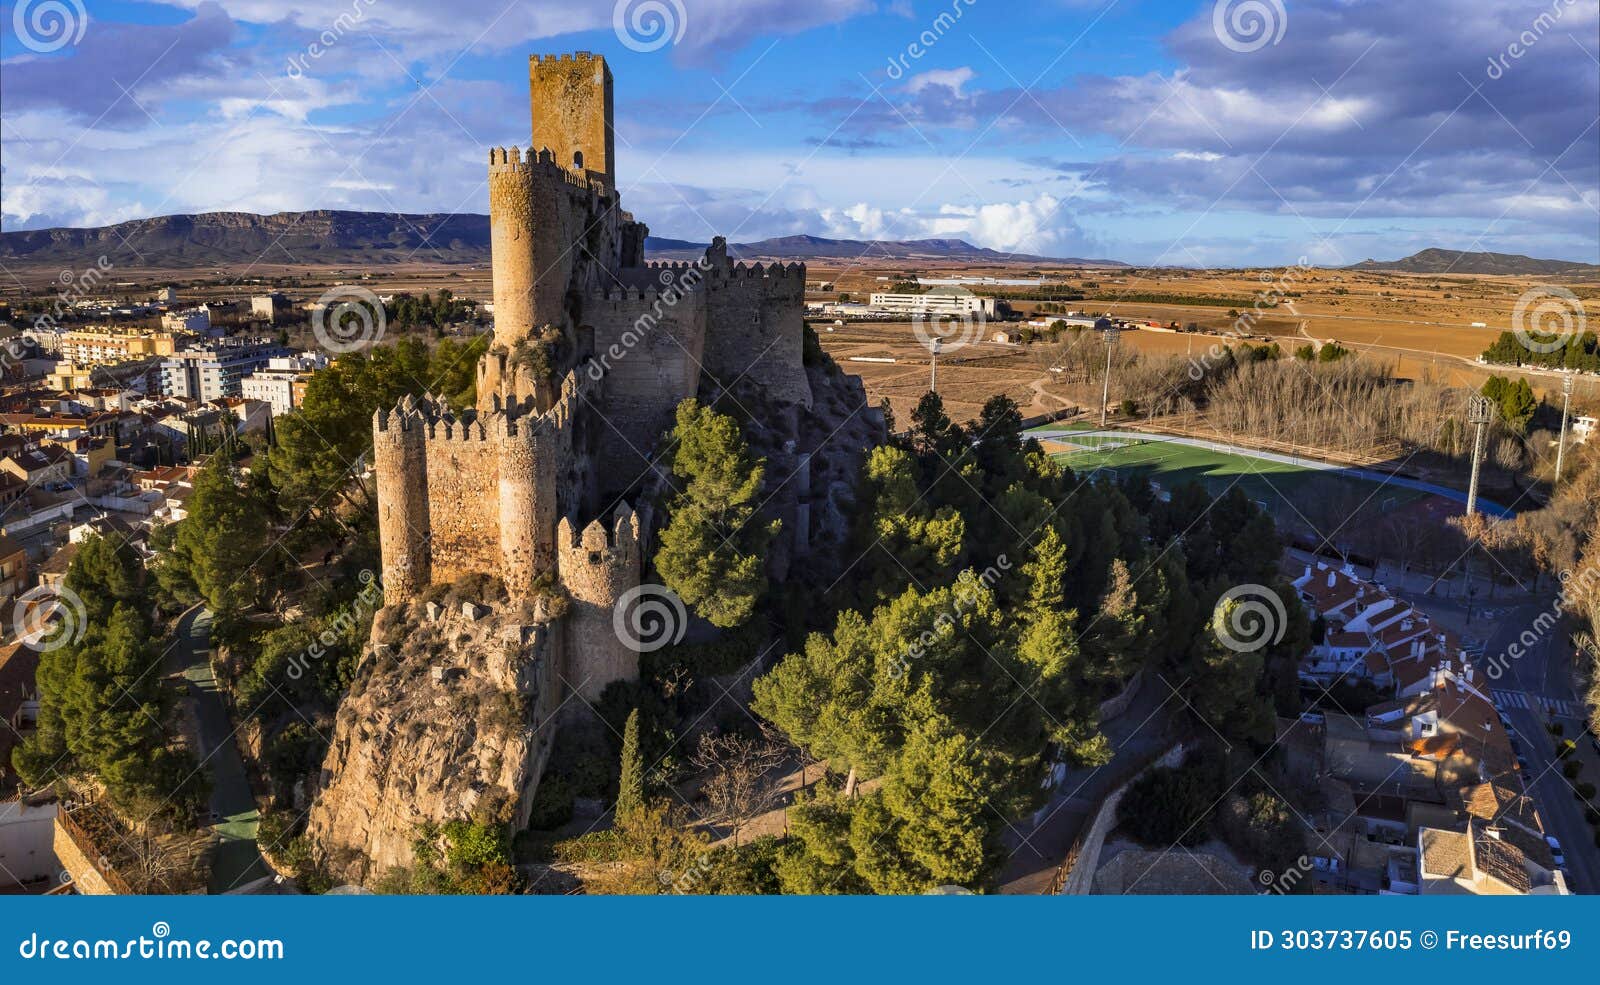 most impressive medieval castles and towns of spain - almansa, castile-la mancha provice